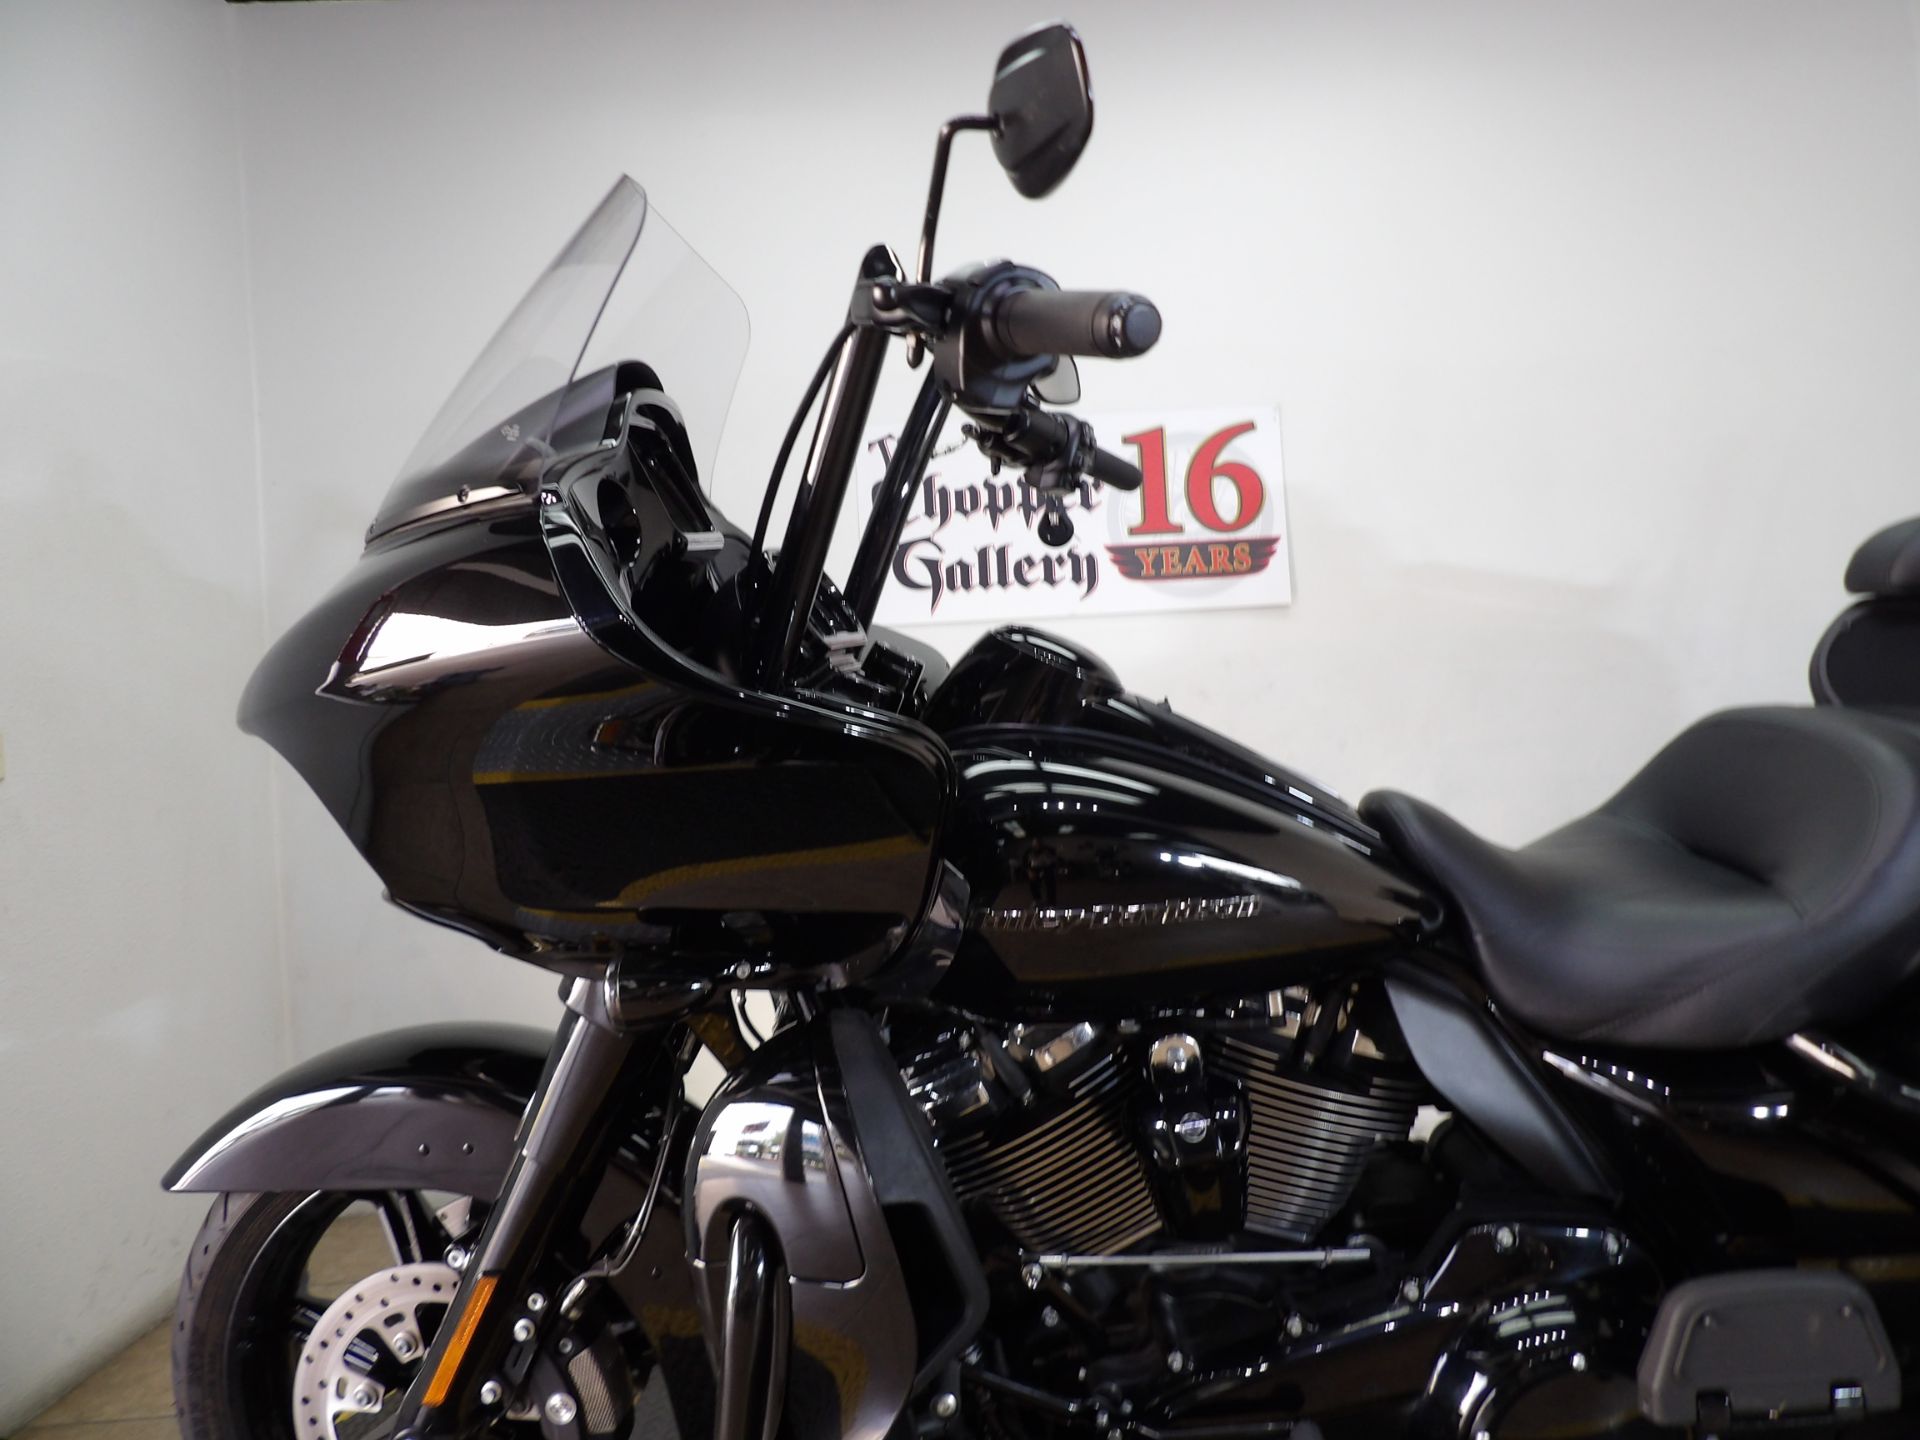 2021 Harley-Davidson Road Glide® Limited in Temecula, California - Photo 4